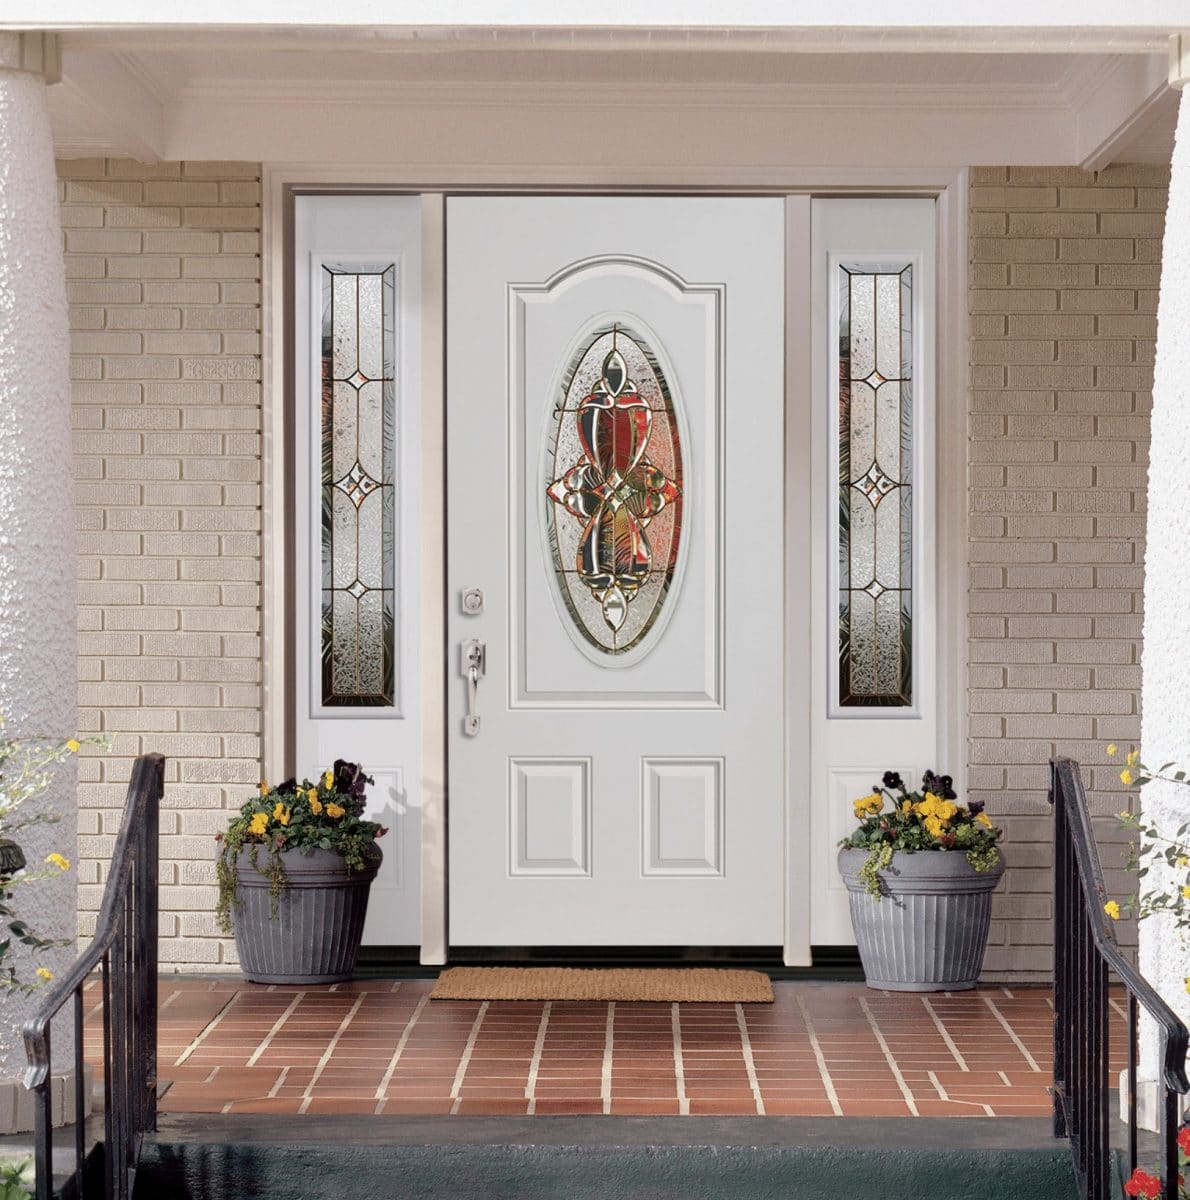 Quality decorative front door glass by Jacksonville Doors and Windows - your local door glass experts